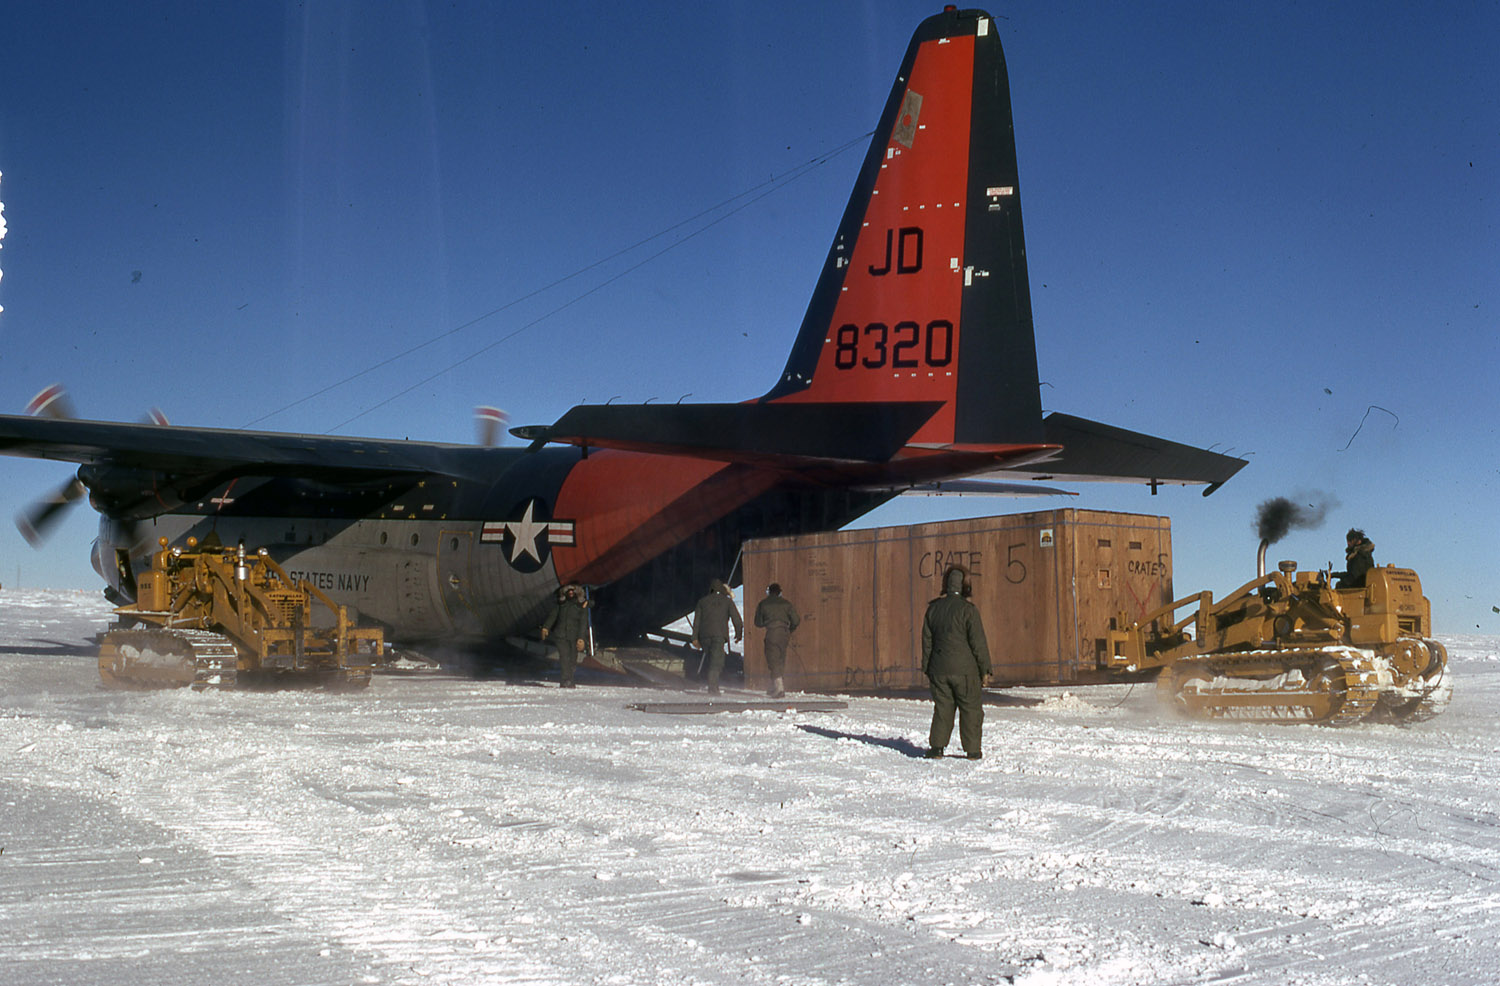 Antarctica Aircraft - Hauling  Stuff to South Pole